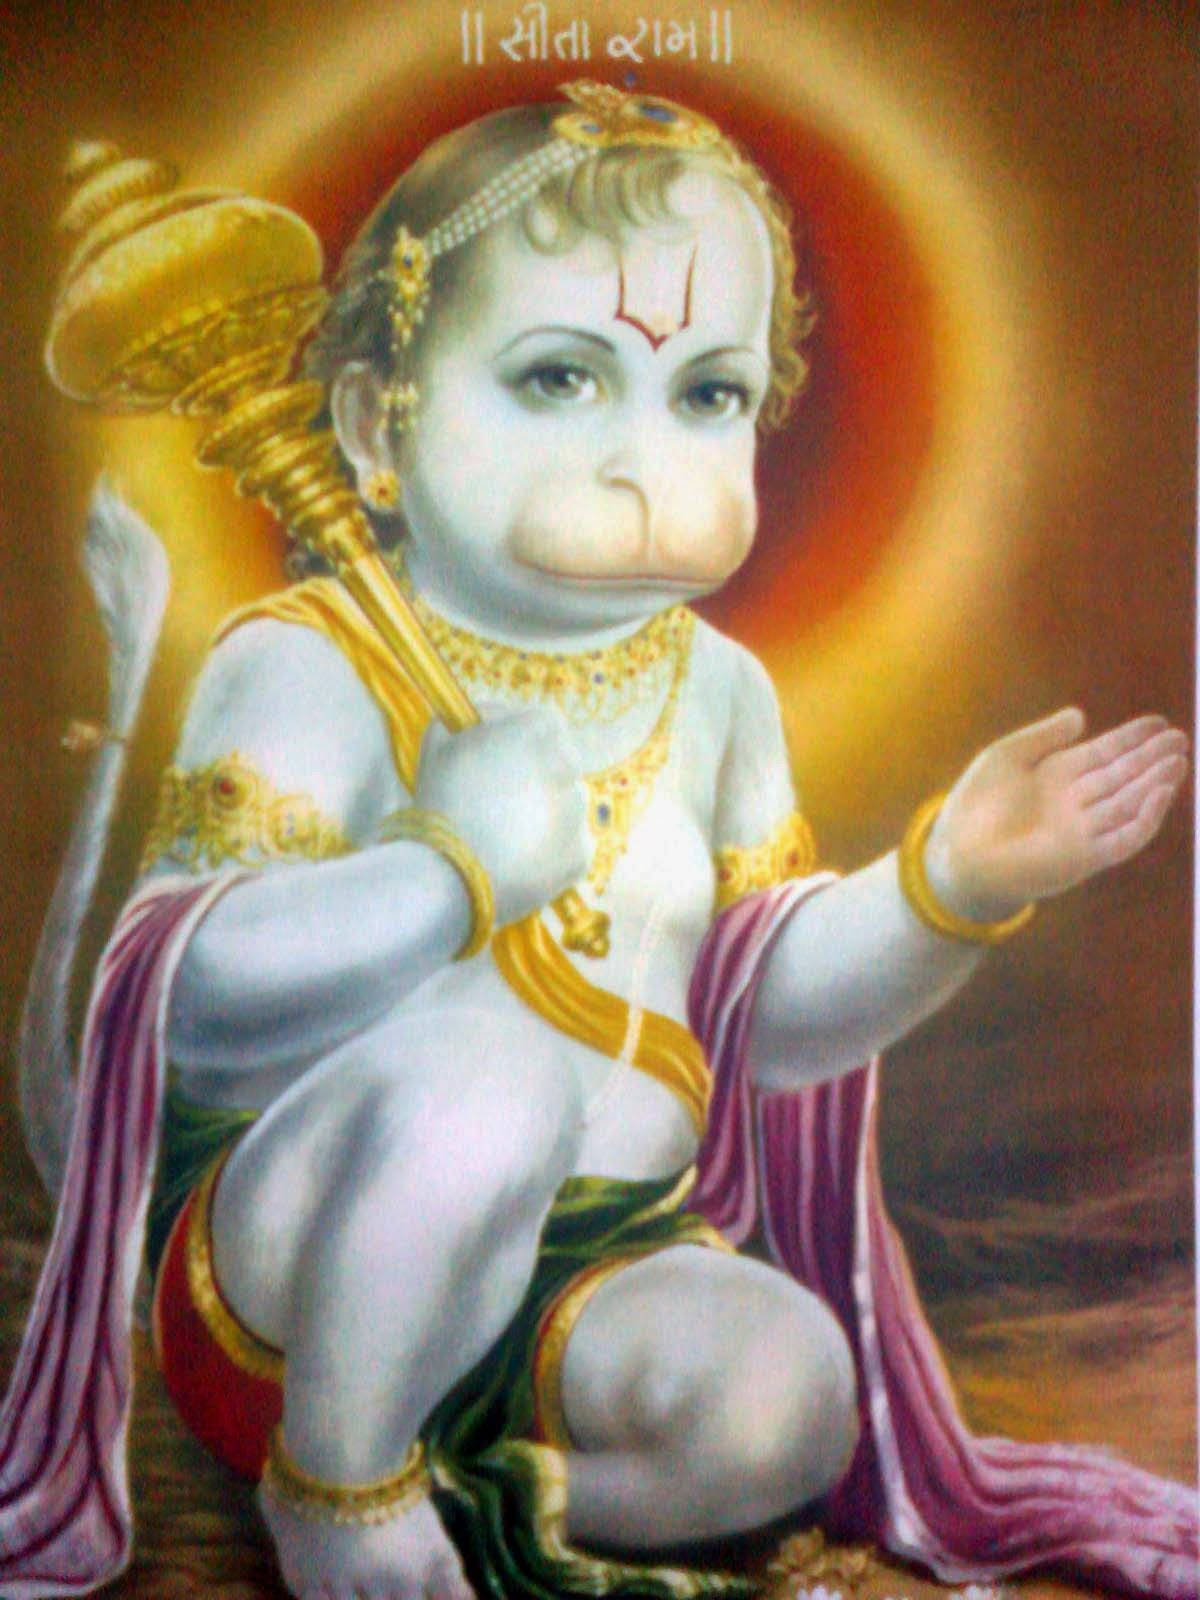 Baby Hanuman Monkey Face Wallpaper